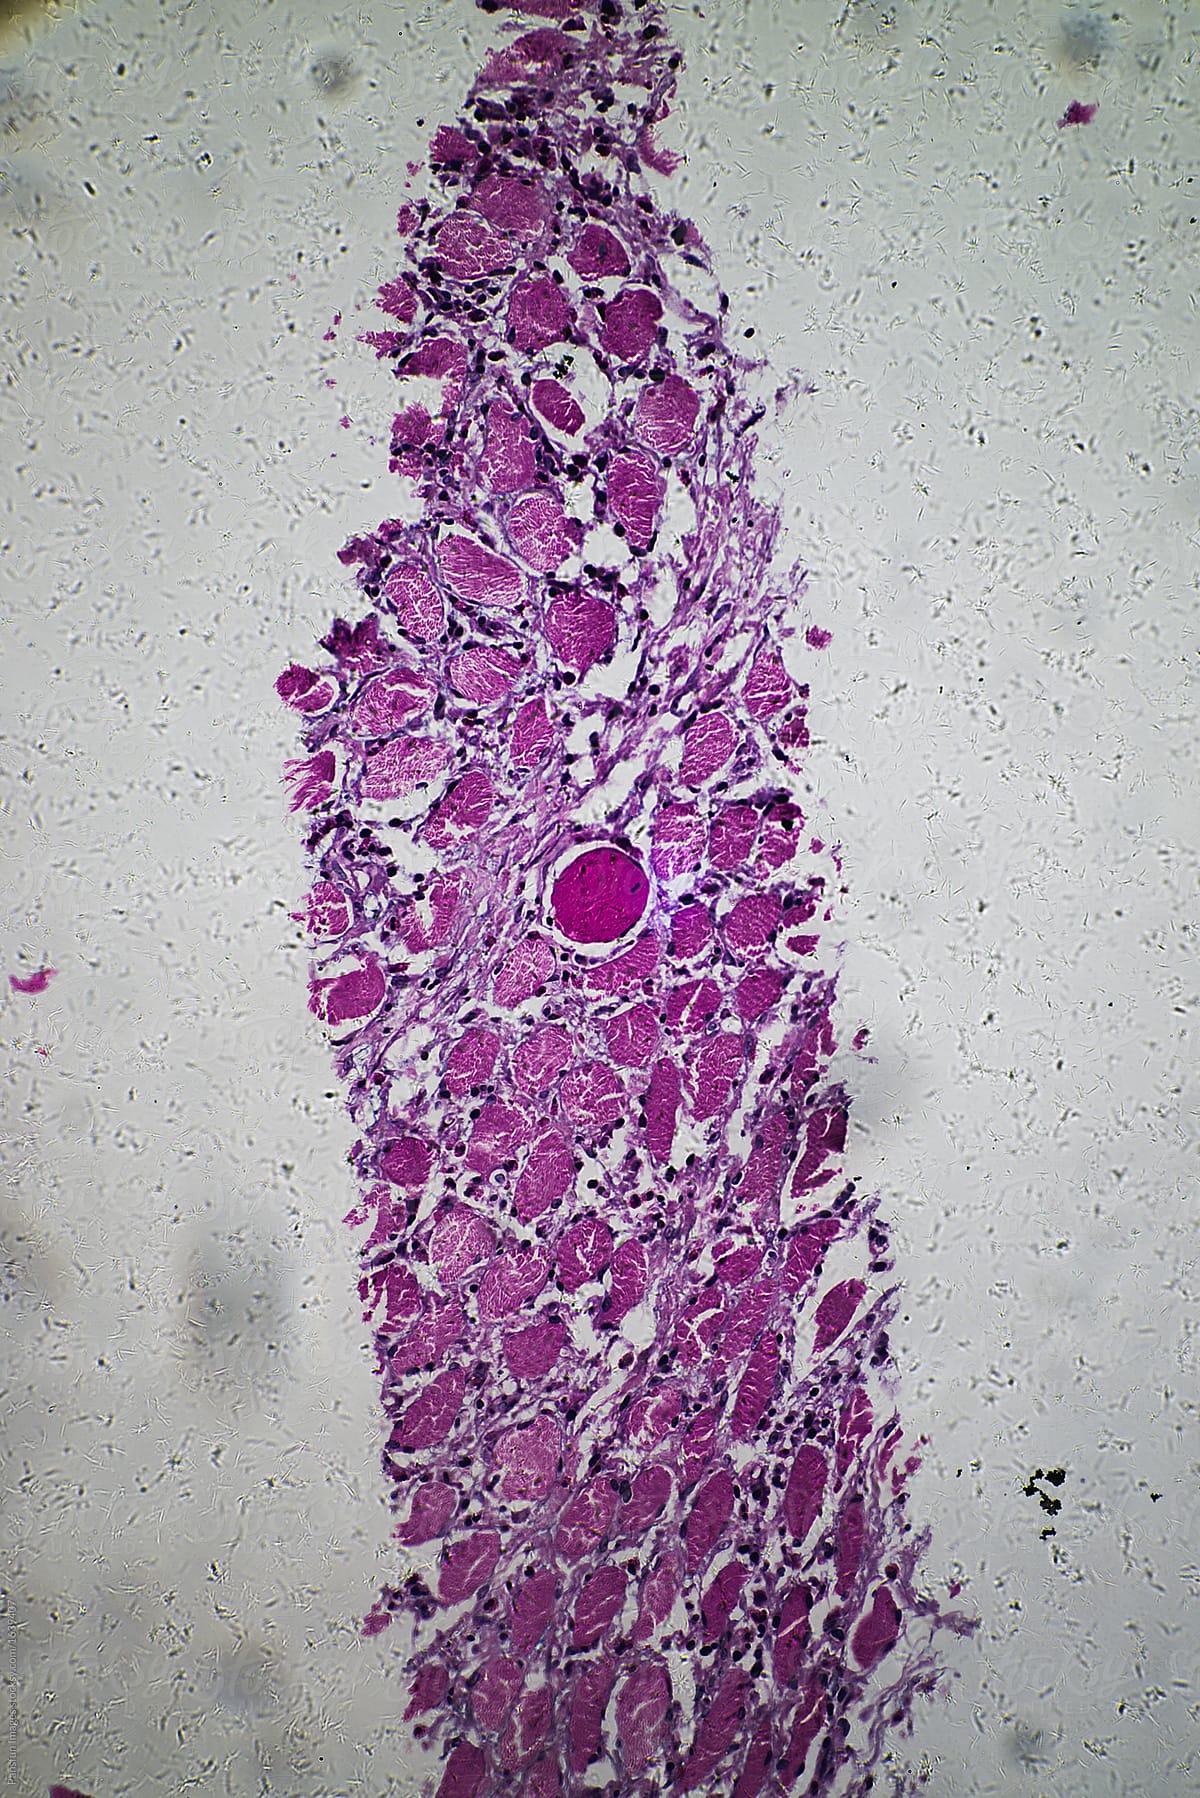 Eosinophilic granuloma of human